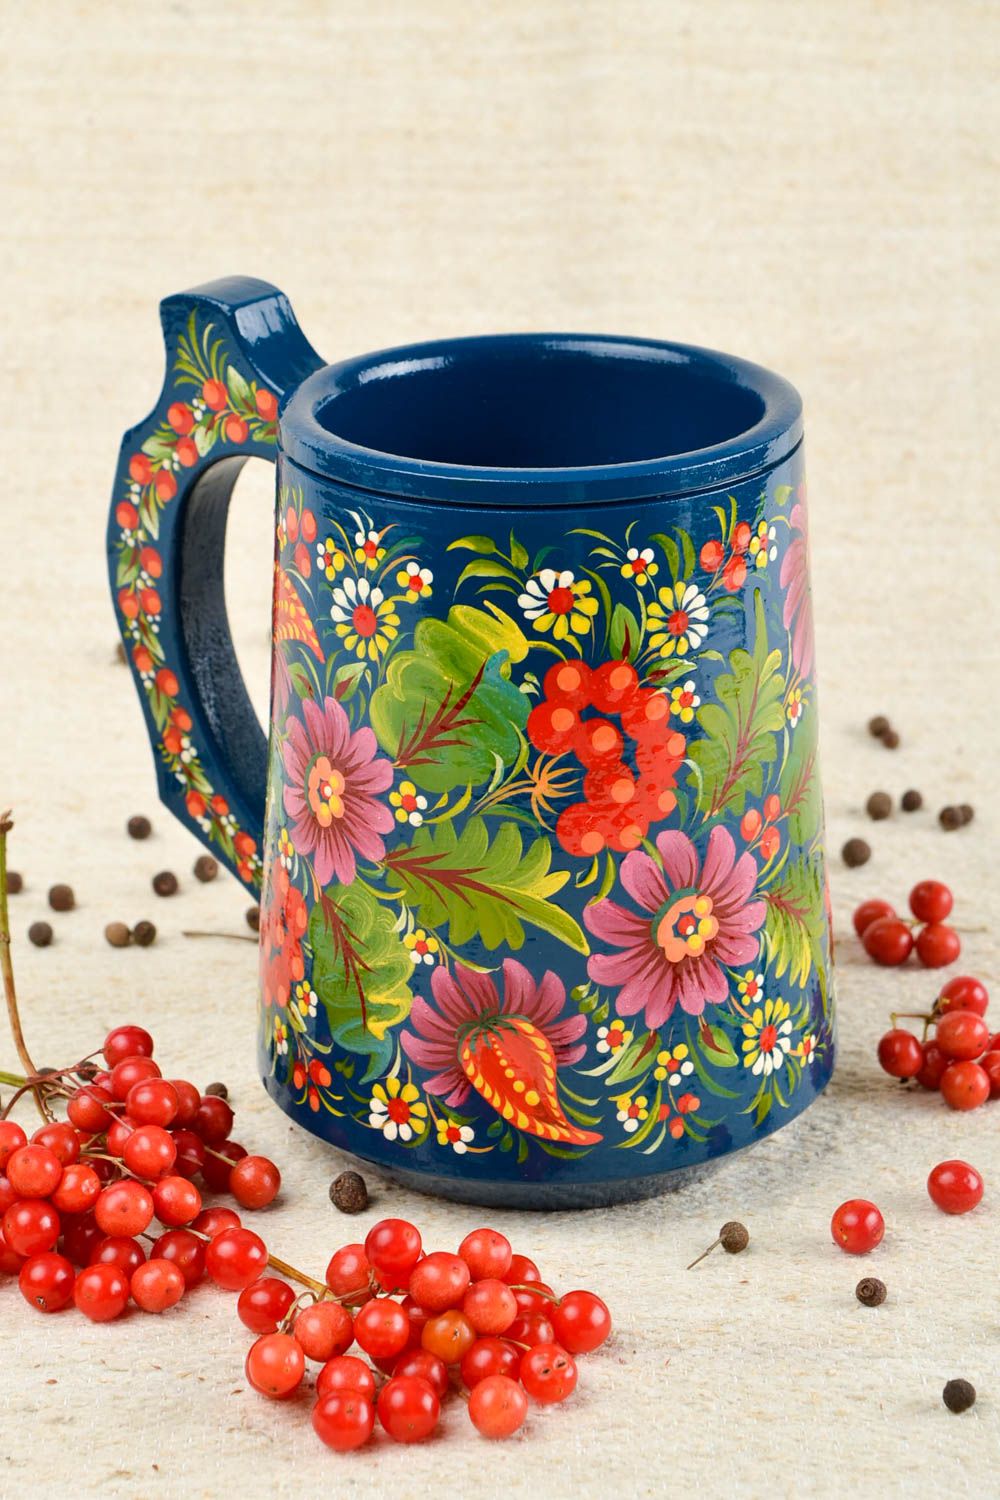 Handmade mug designer wooden glass unusual gift decorative use only decor ideas photo 1